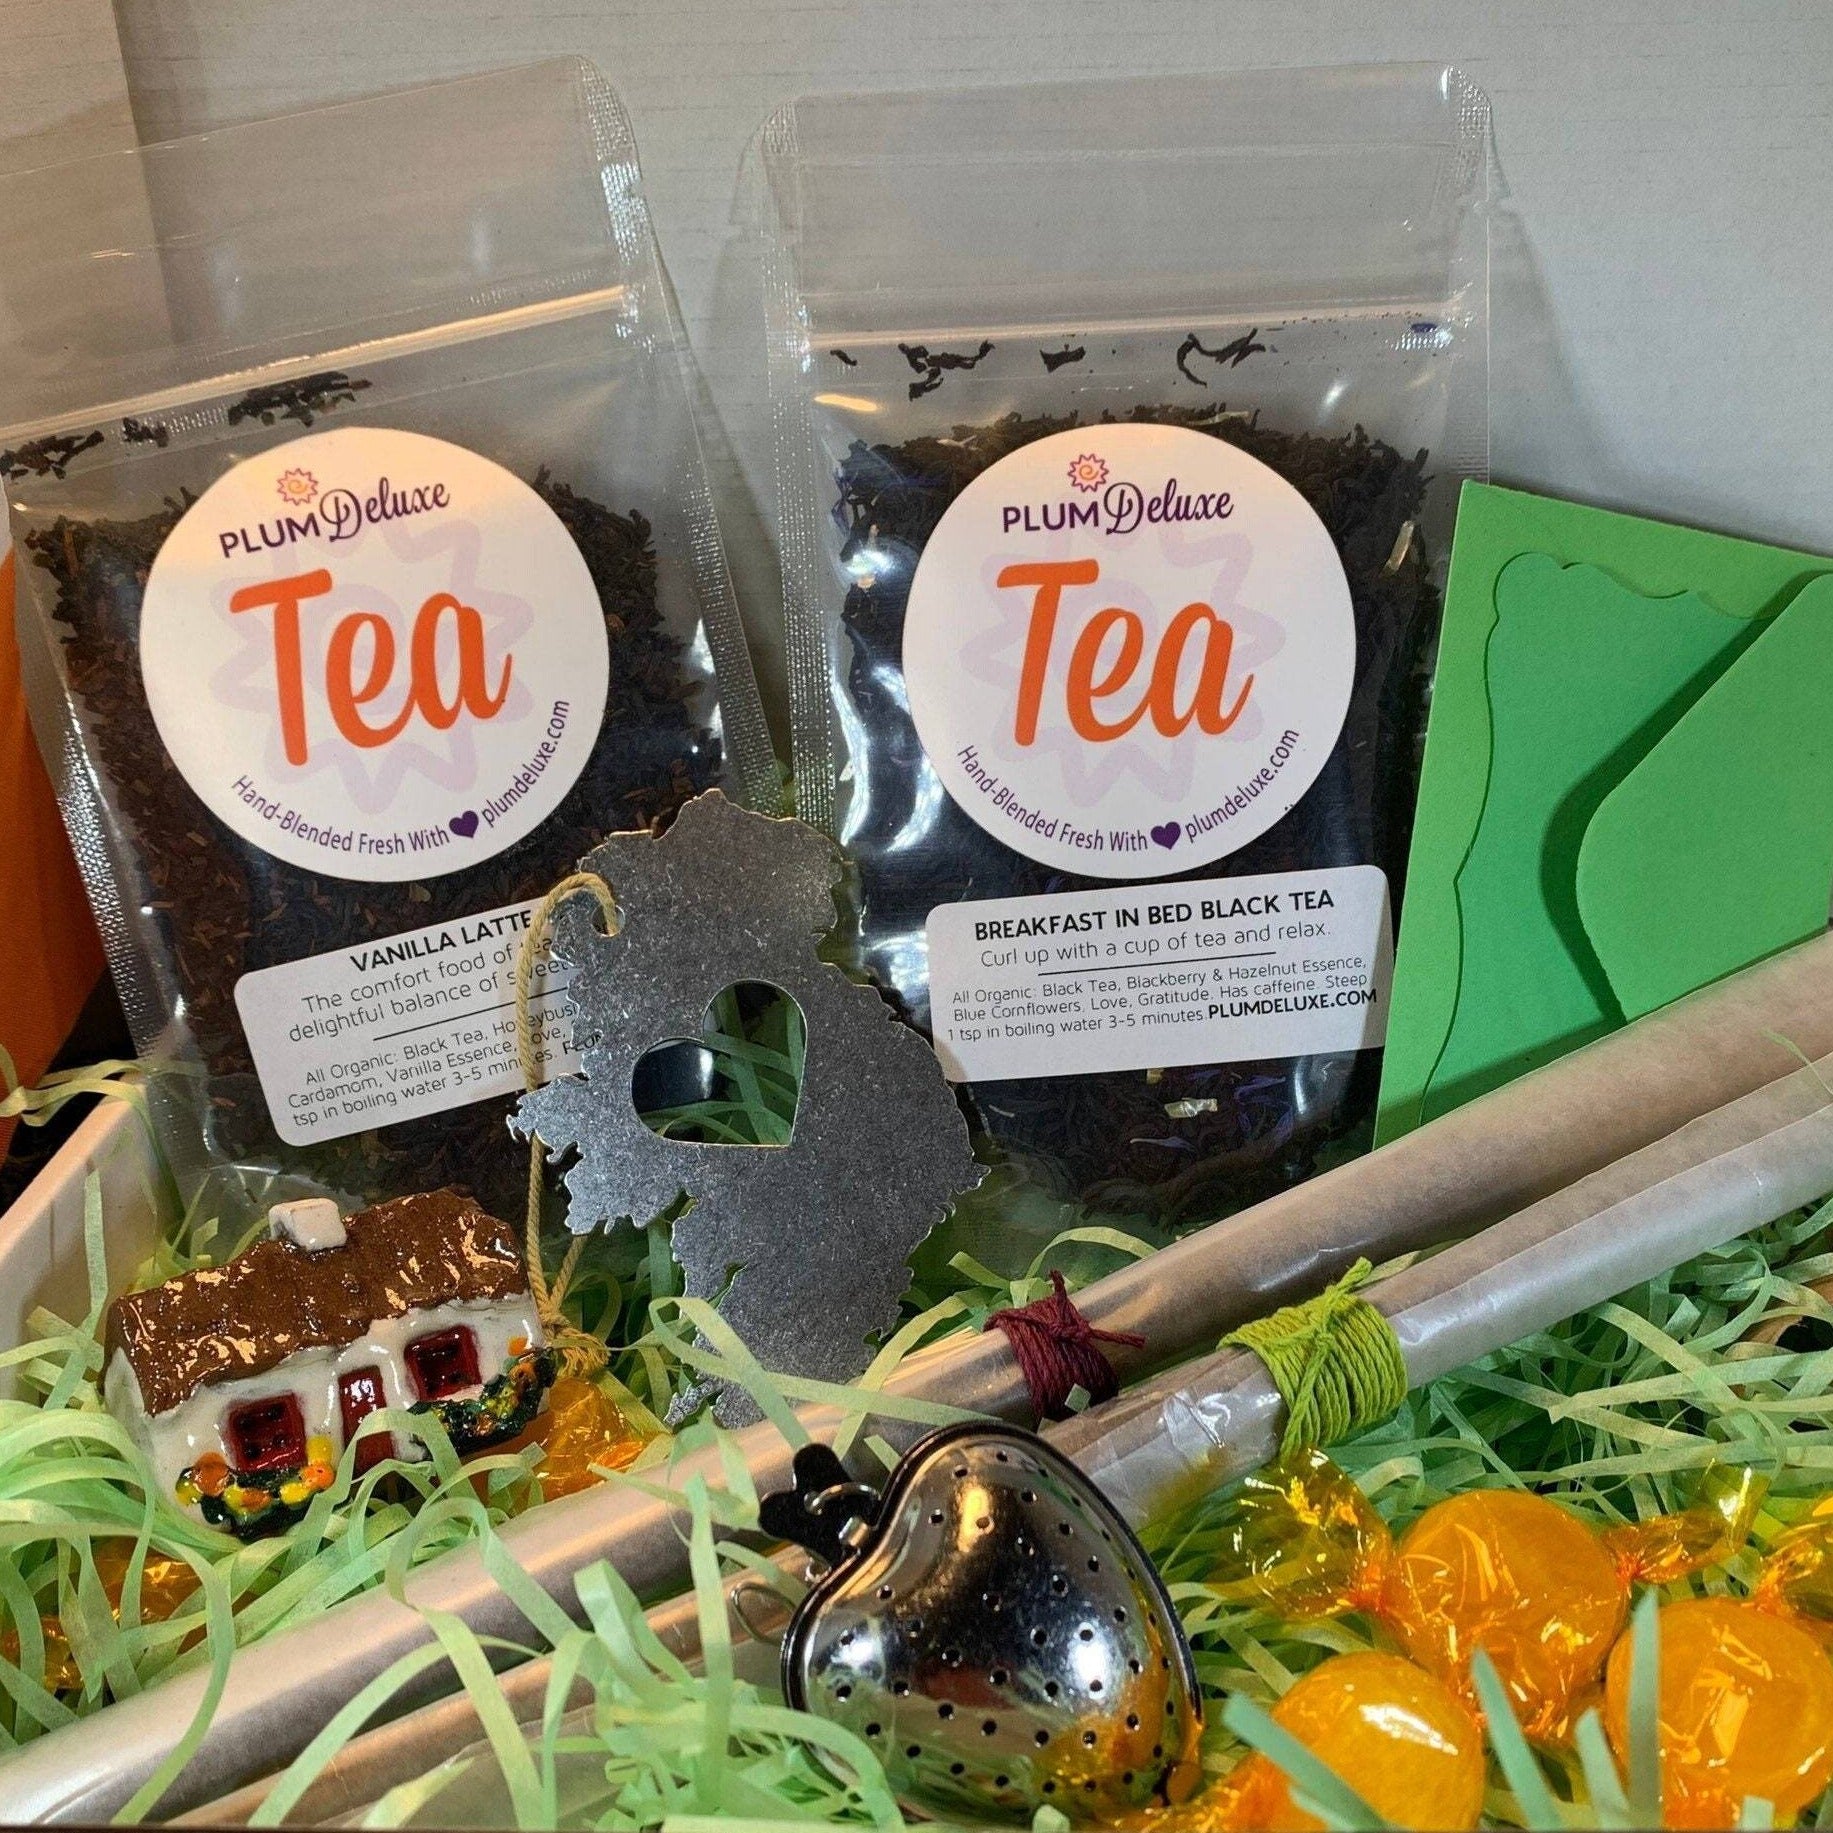 The Mini Box Tea Gifts